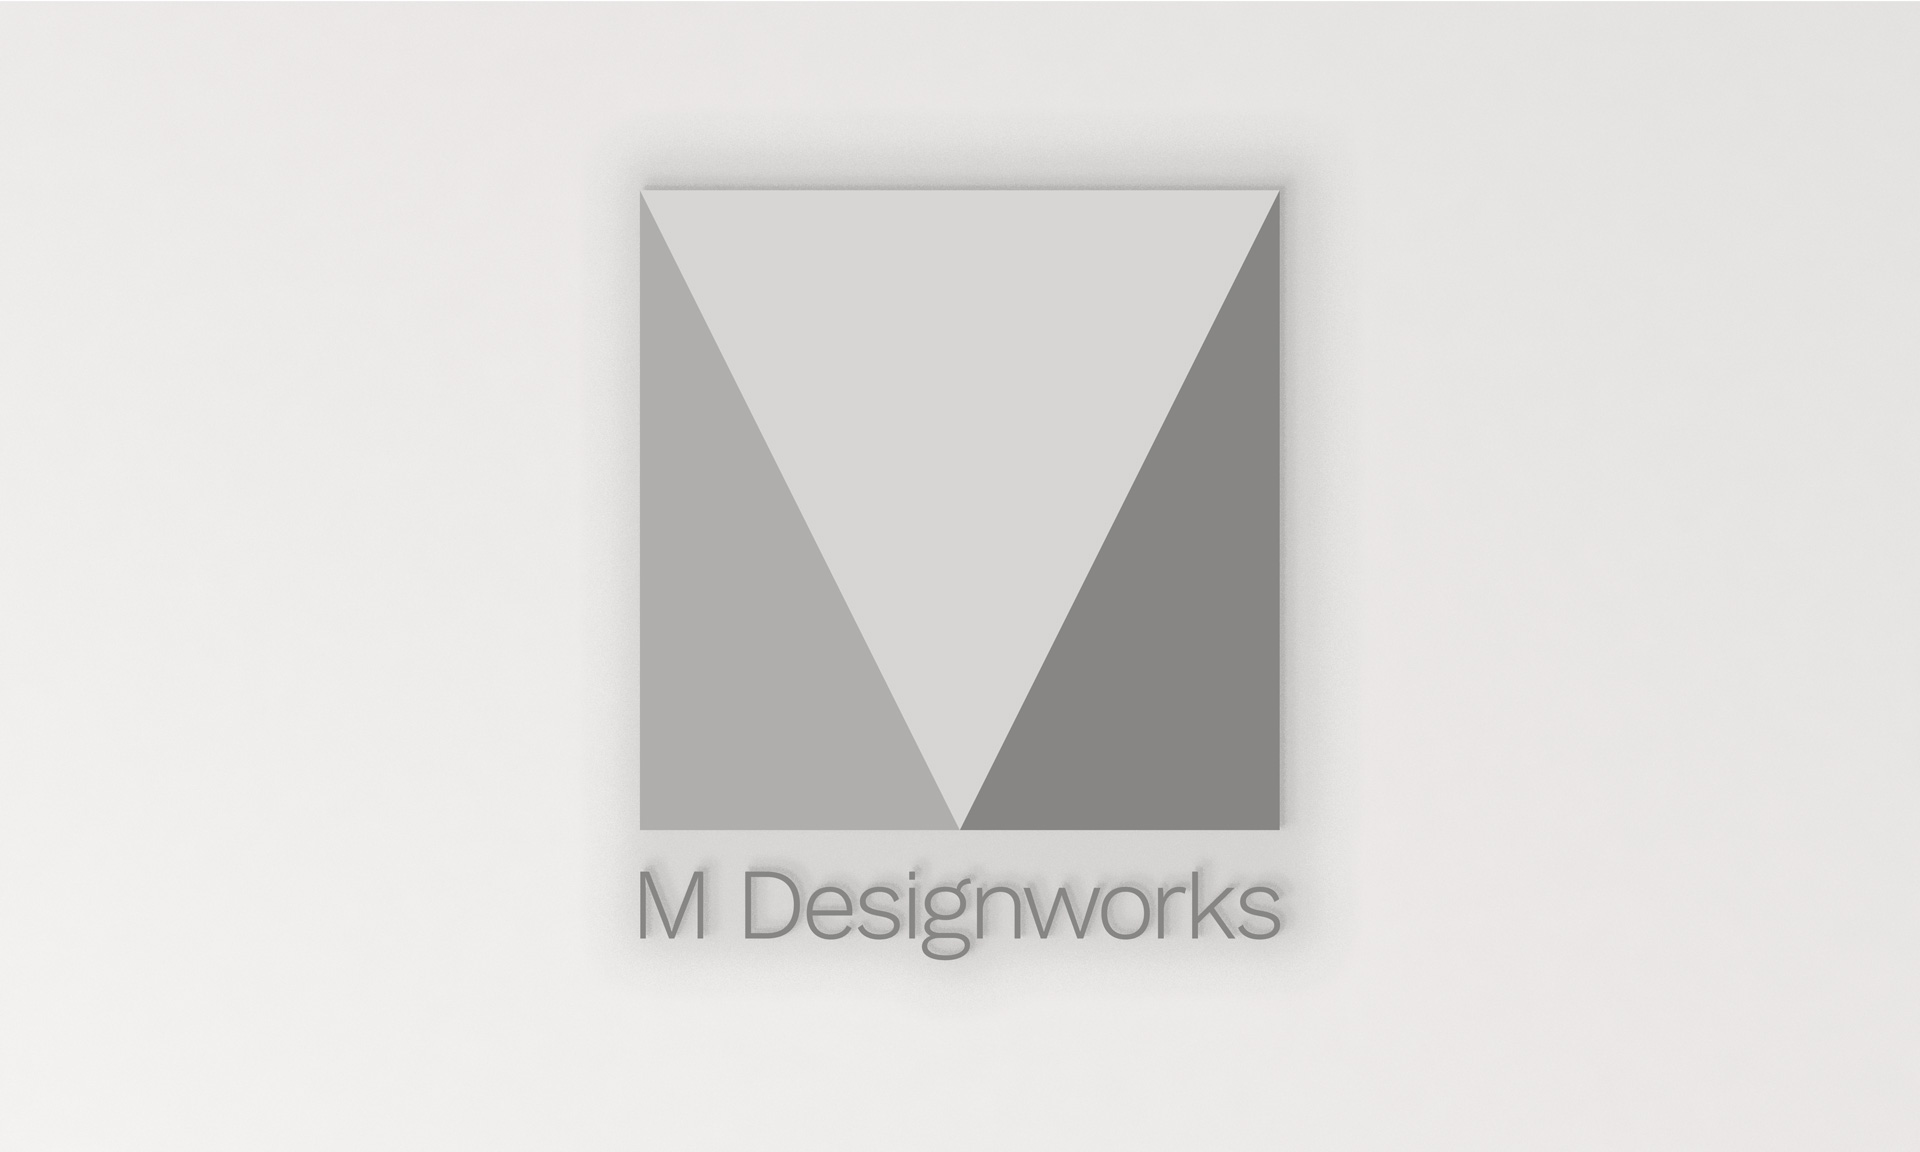 M Designworks grayscale logo